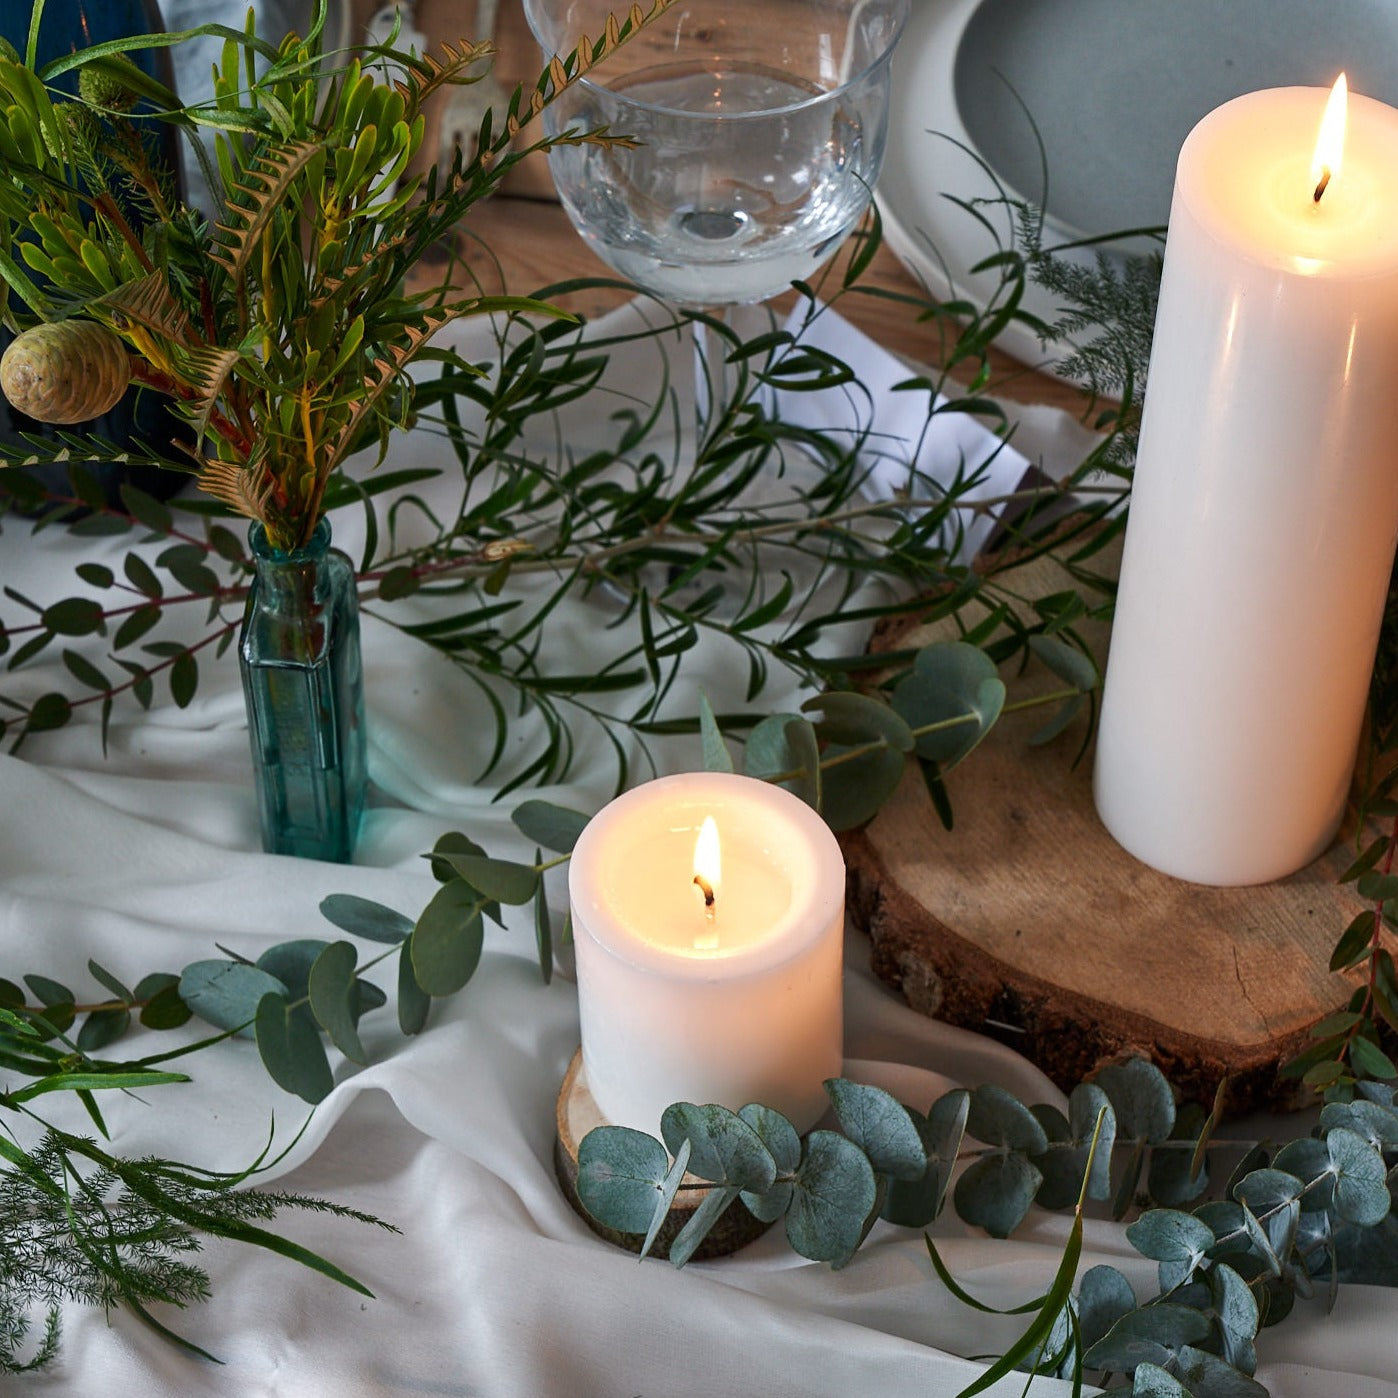 lush woodland bud vase arrangements for weddings and events